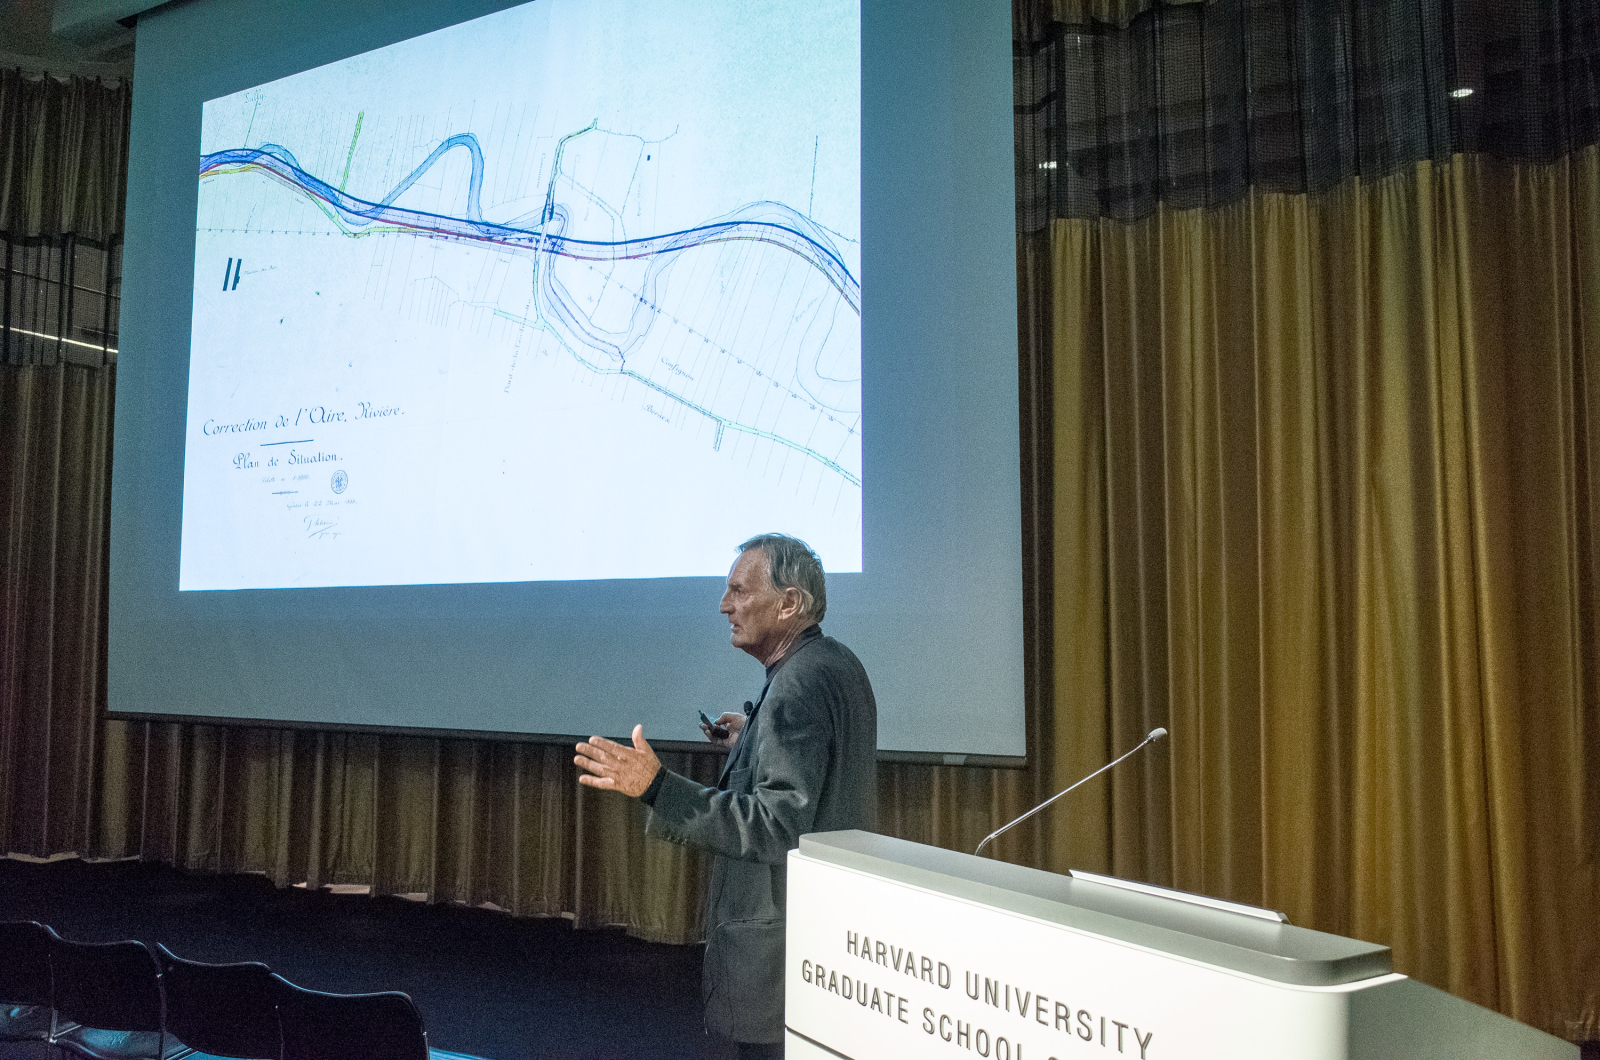 Daniel Urban Kiley Lecture: Georges Descombes, “Designing a River Garden”